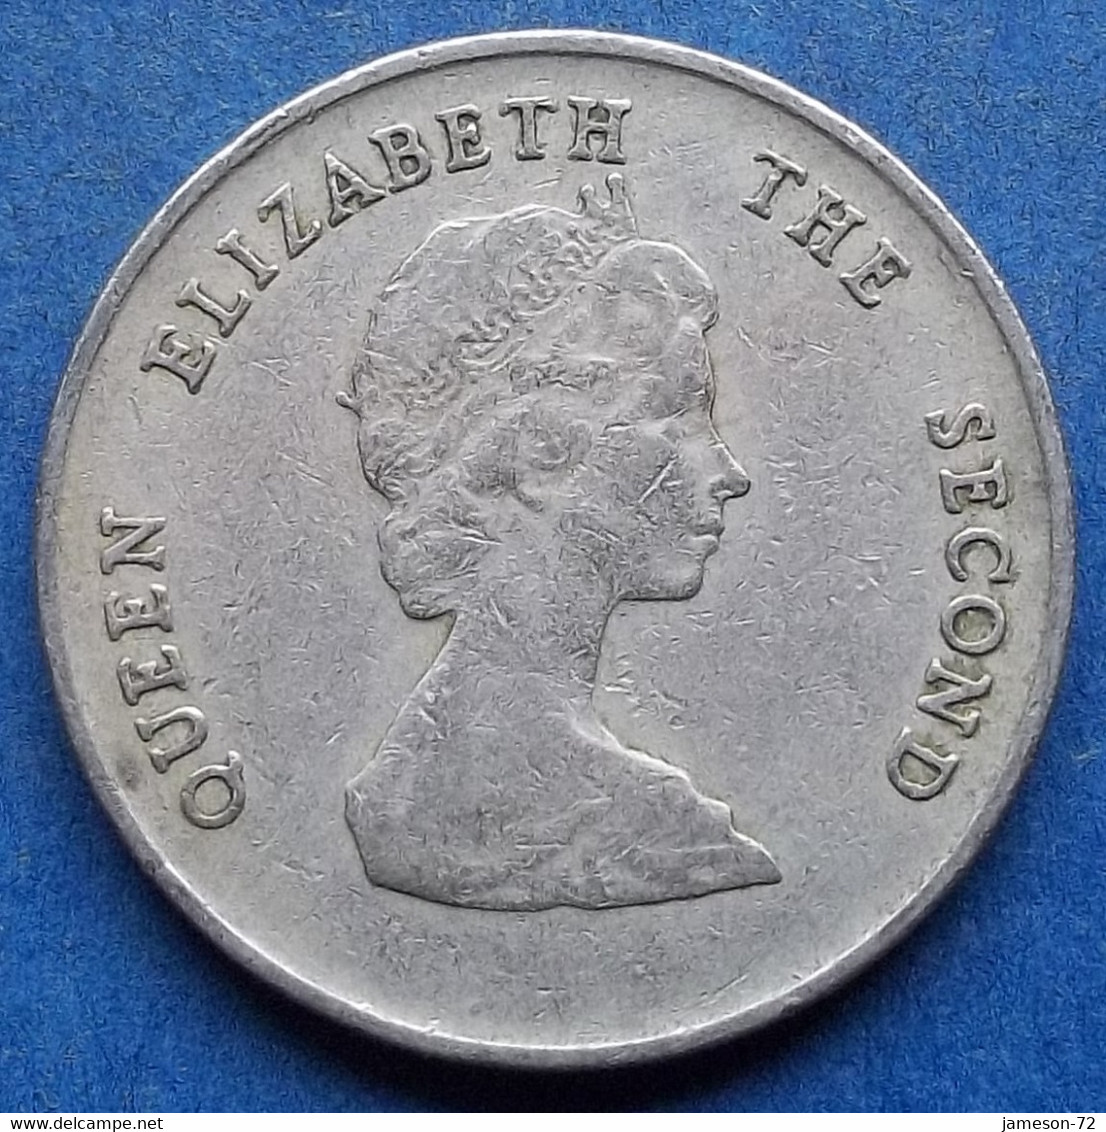 EAST CARIBBEAN STATES - 25 Cents 1981 KM# 14 Elizabeth II - Edelweiss Coins - Caraïbes Orientales (Etats Des)